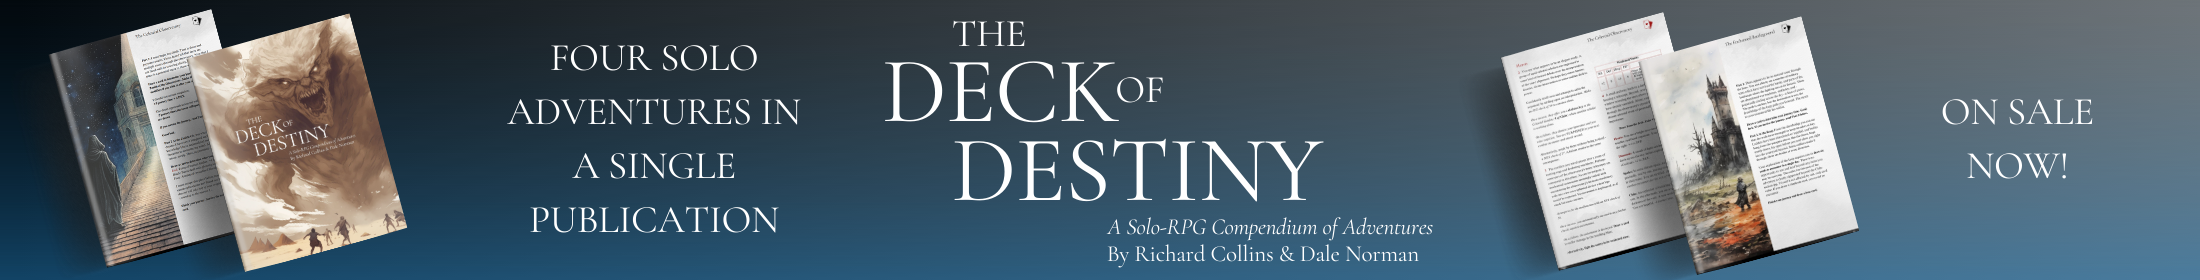 The Deck of Destiny: Solo-RPG Adventures